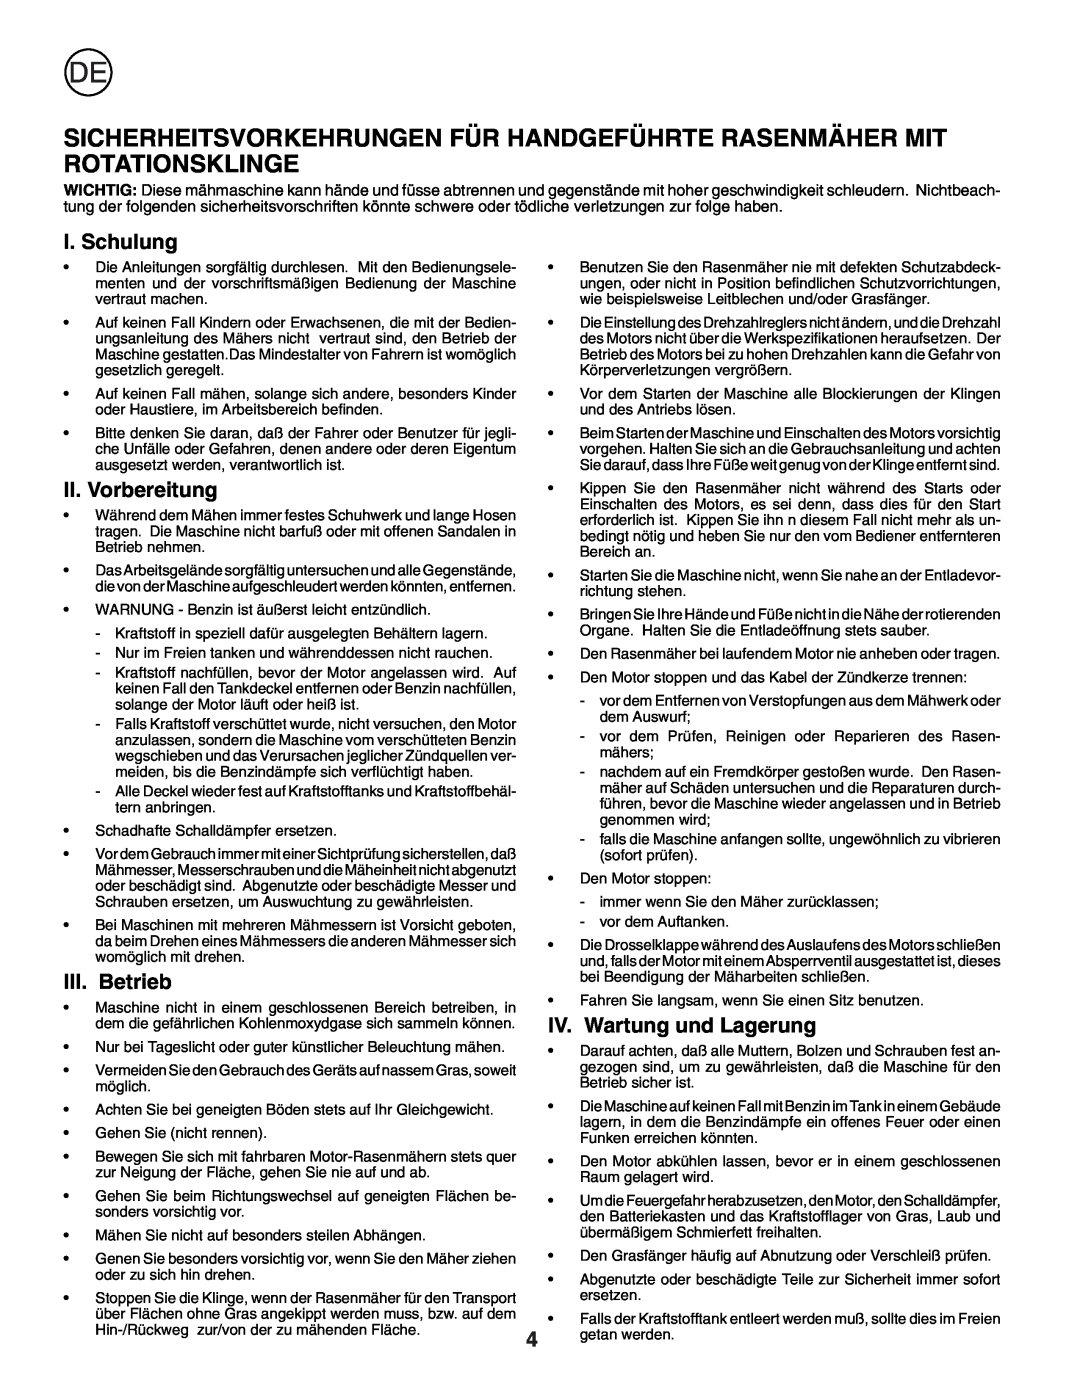 Husqvarna J50R instruction manual I. Schulung, II. Vorbereitung, III. Betrieb, IV. Wartung und Lagerung 